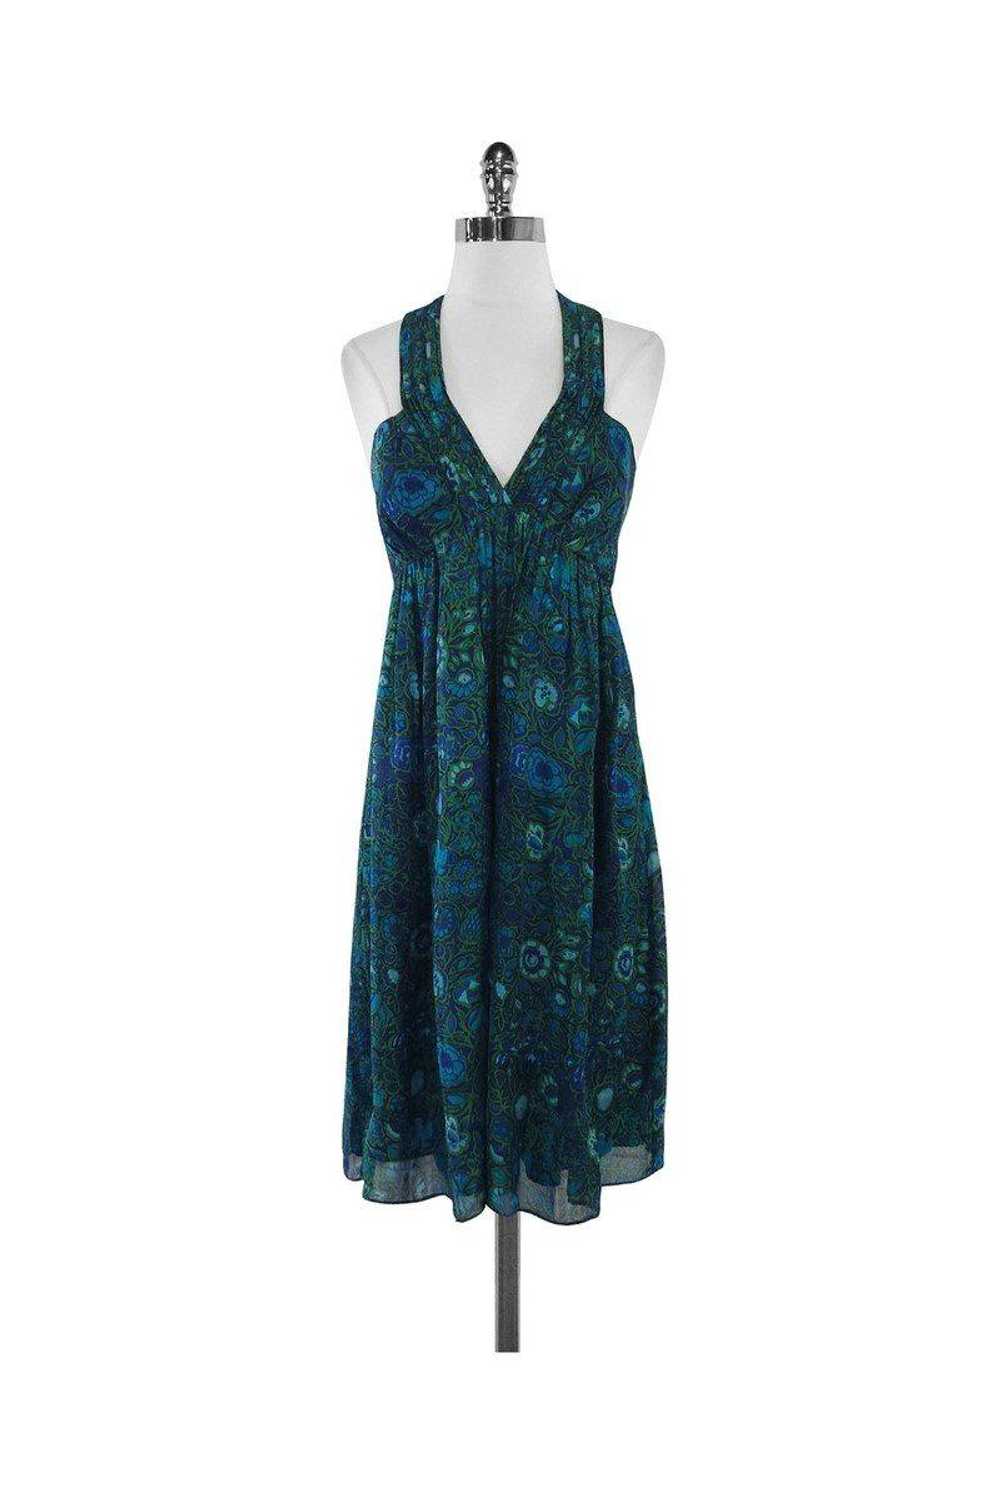 Shoshanna - Blue & Green Floral Silk Sleeveless D… - image 1